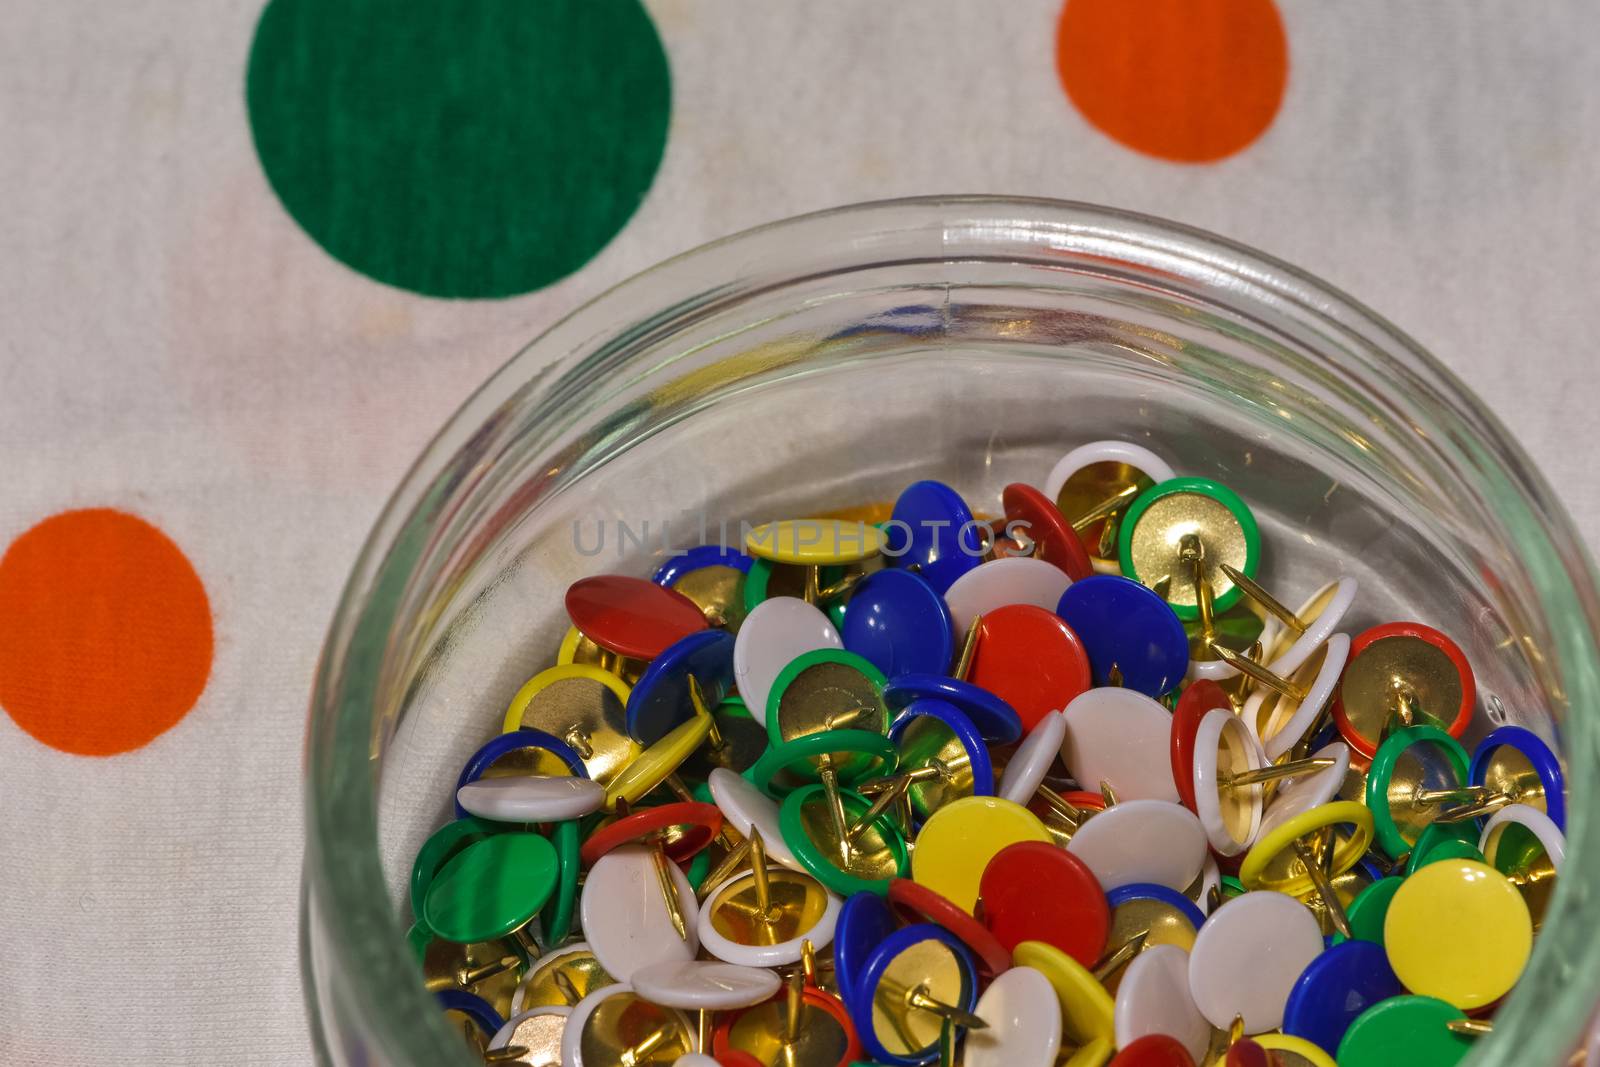 colored thumbtacks in a glass jar, horizontal image